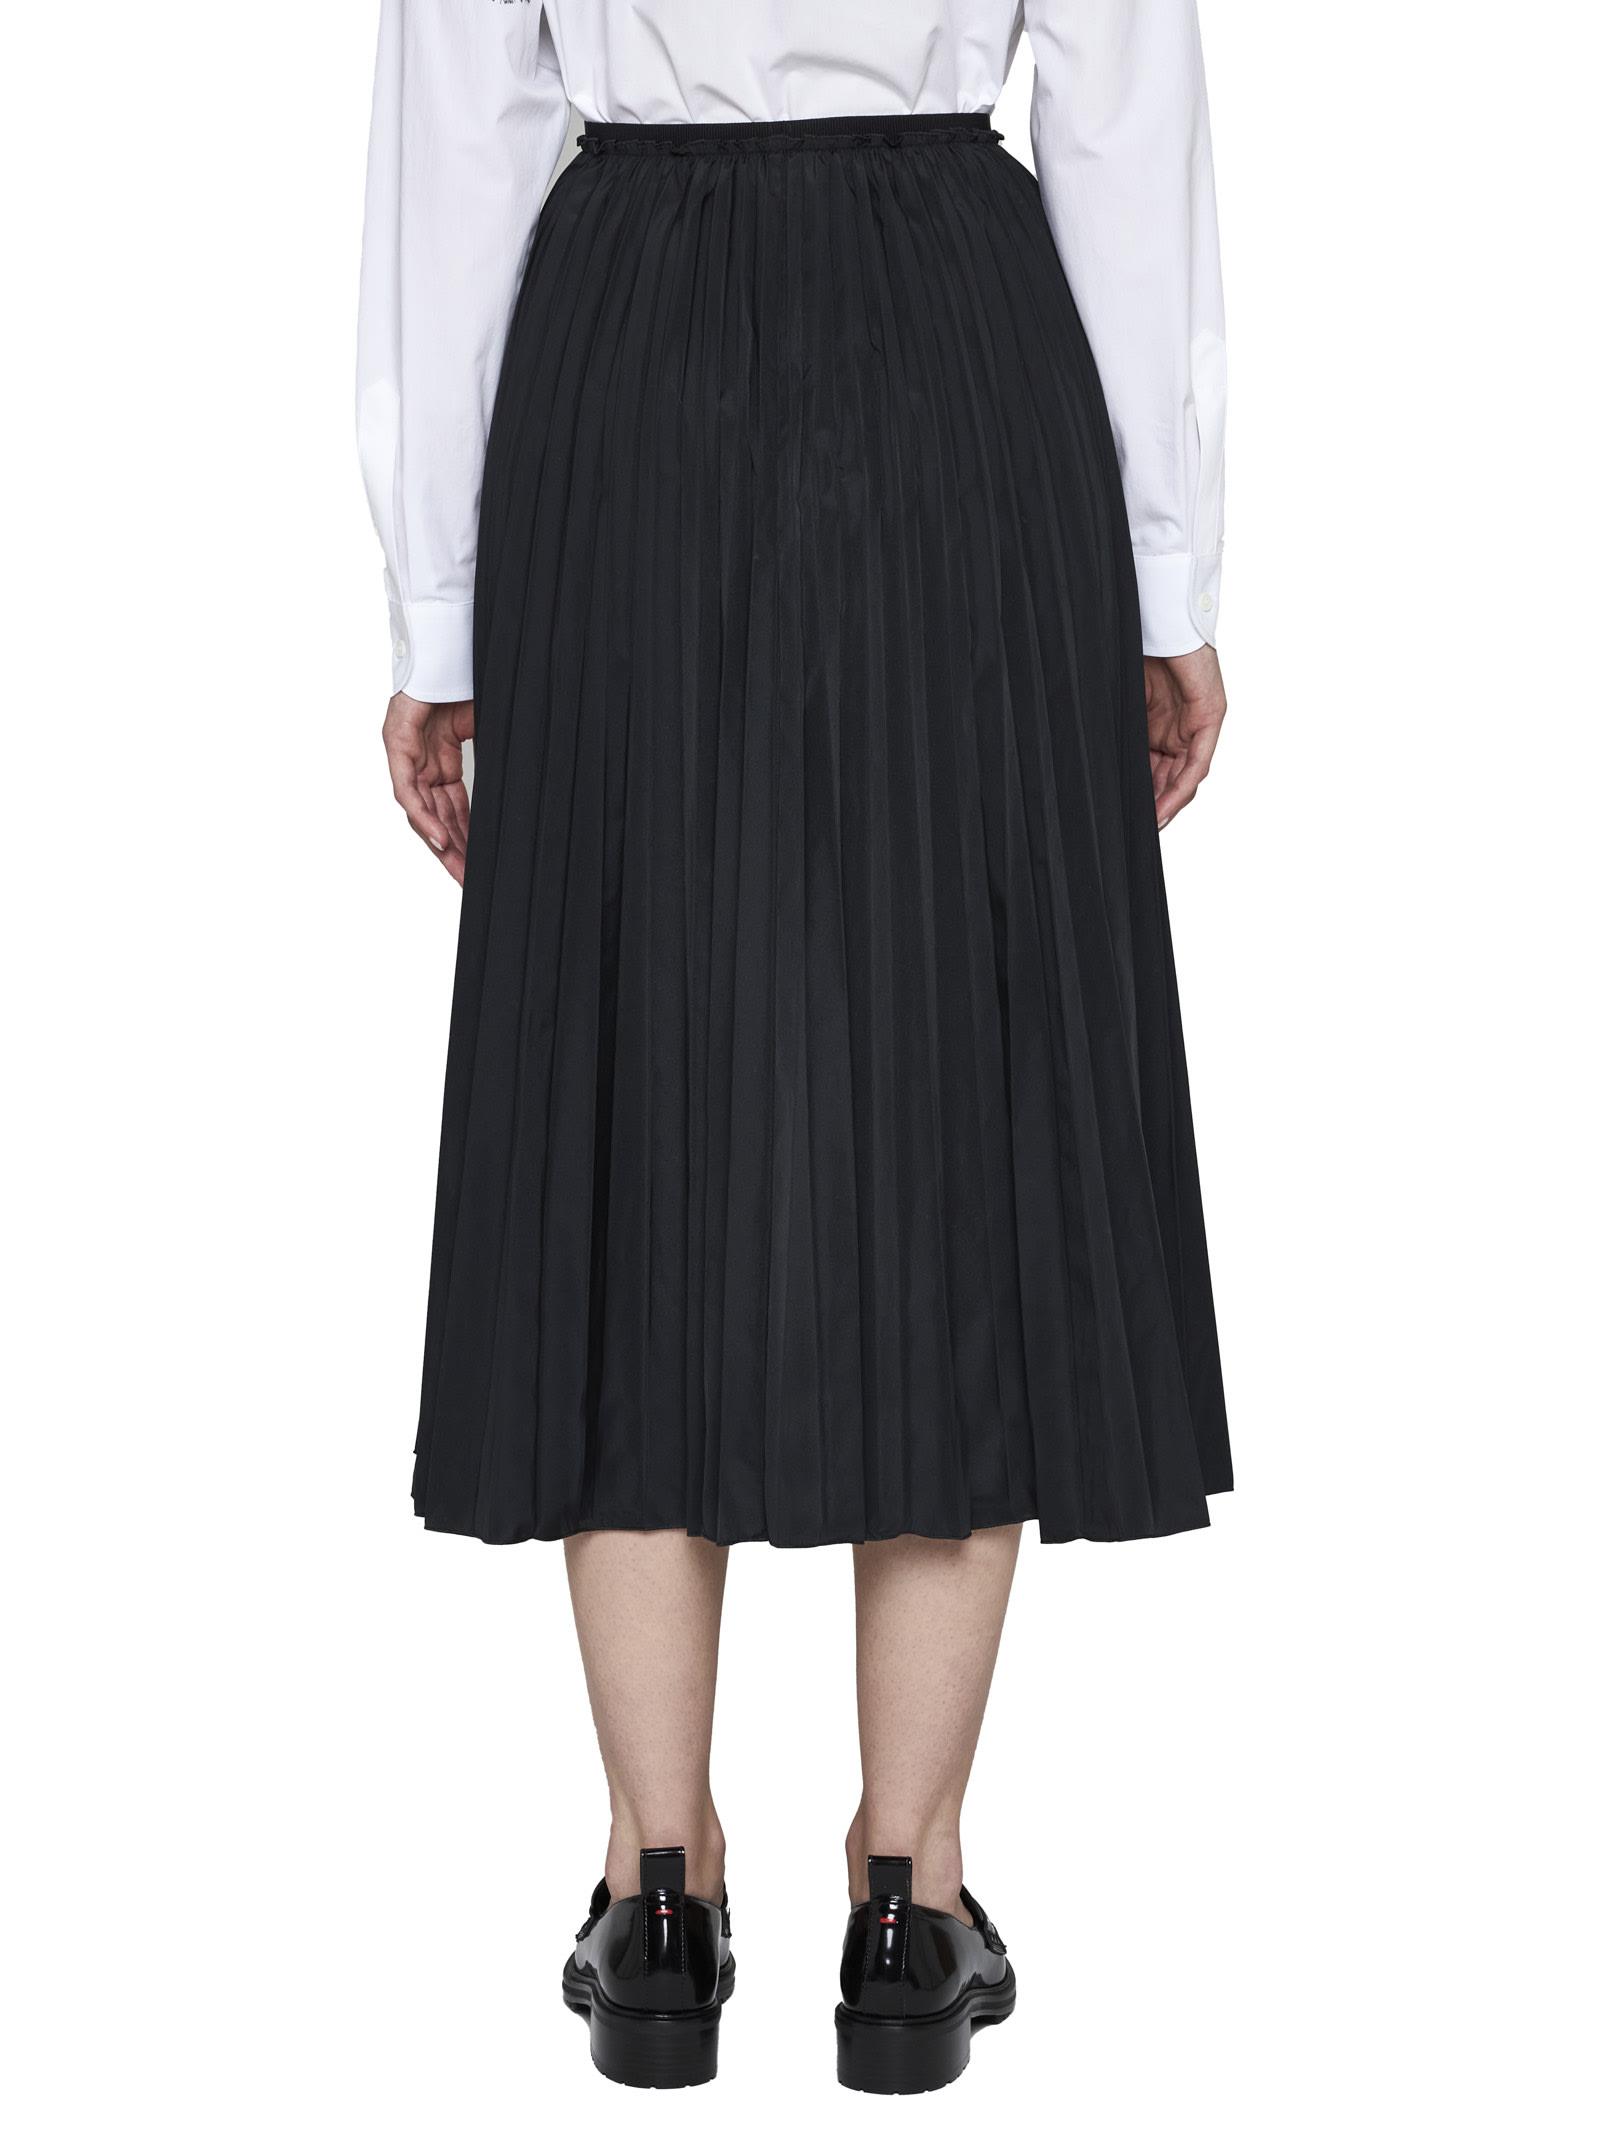 udvide Decrement tuberkulose RED Valentino Skirt in Black | Lyst